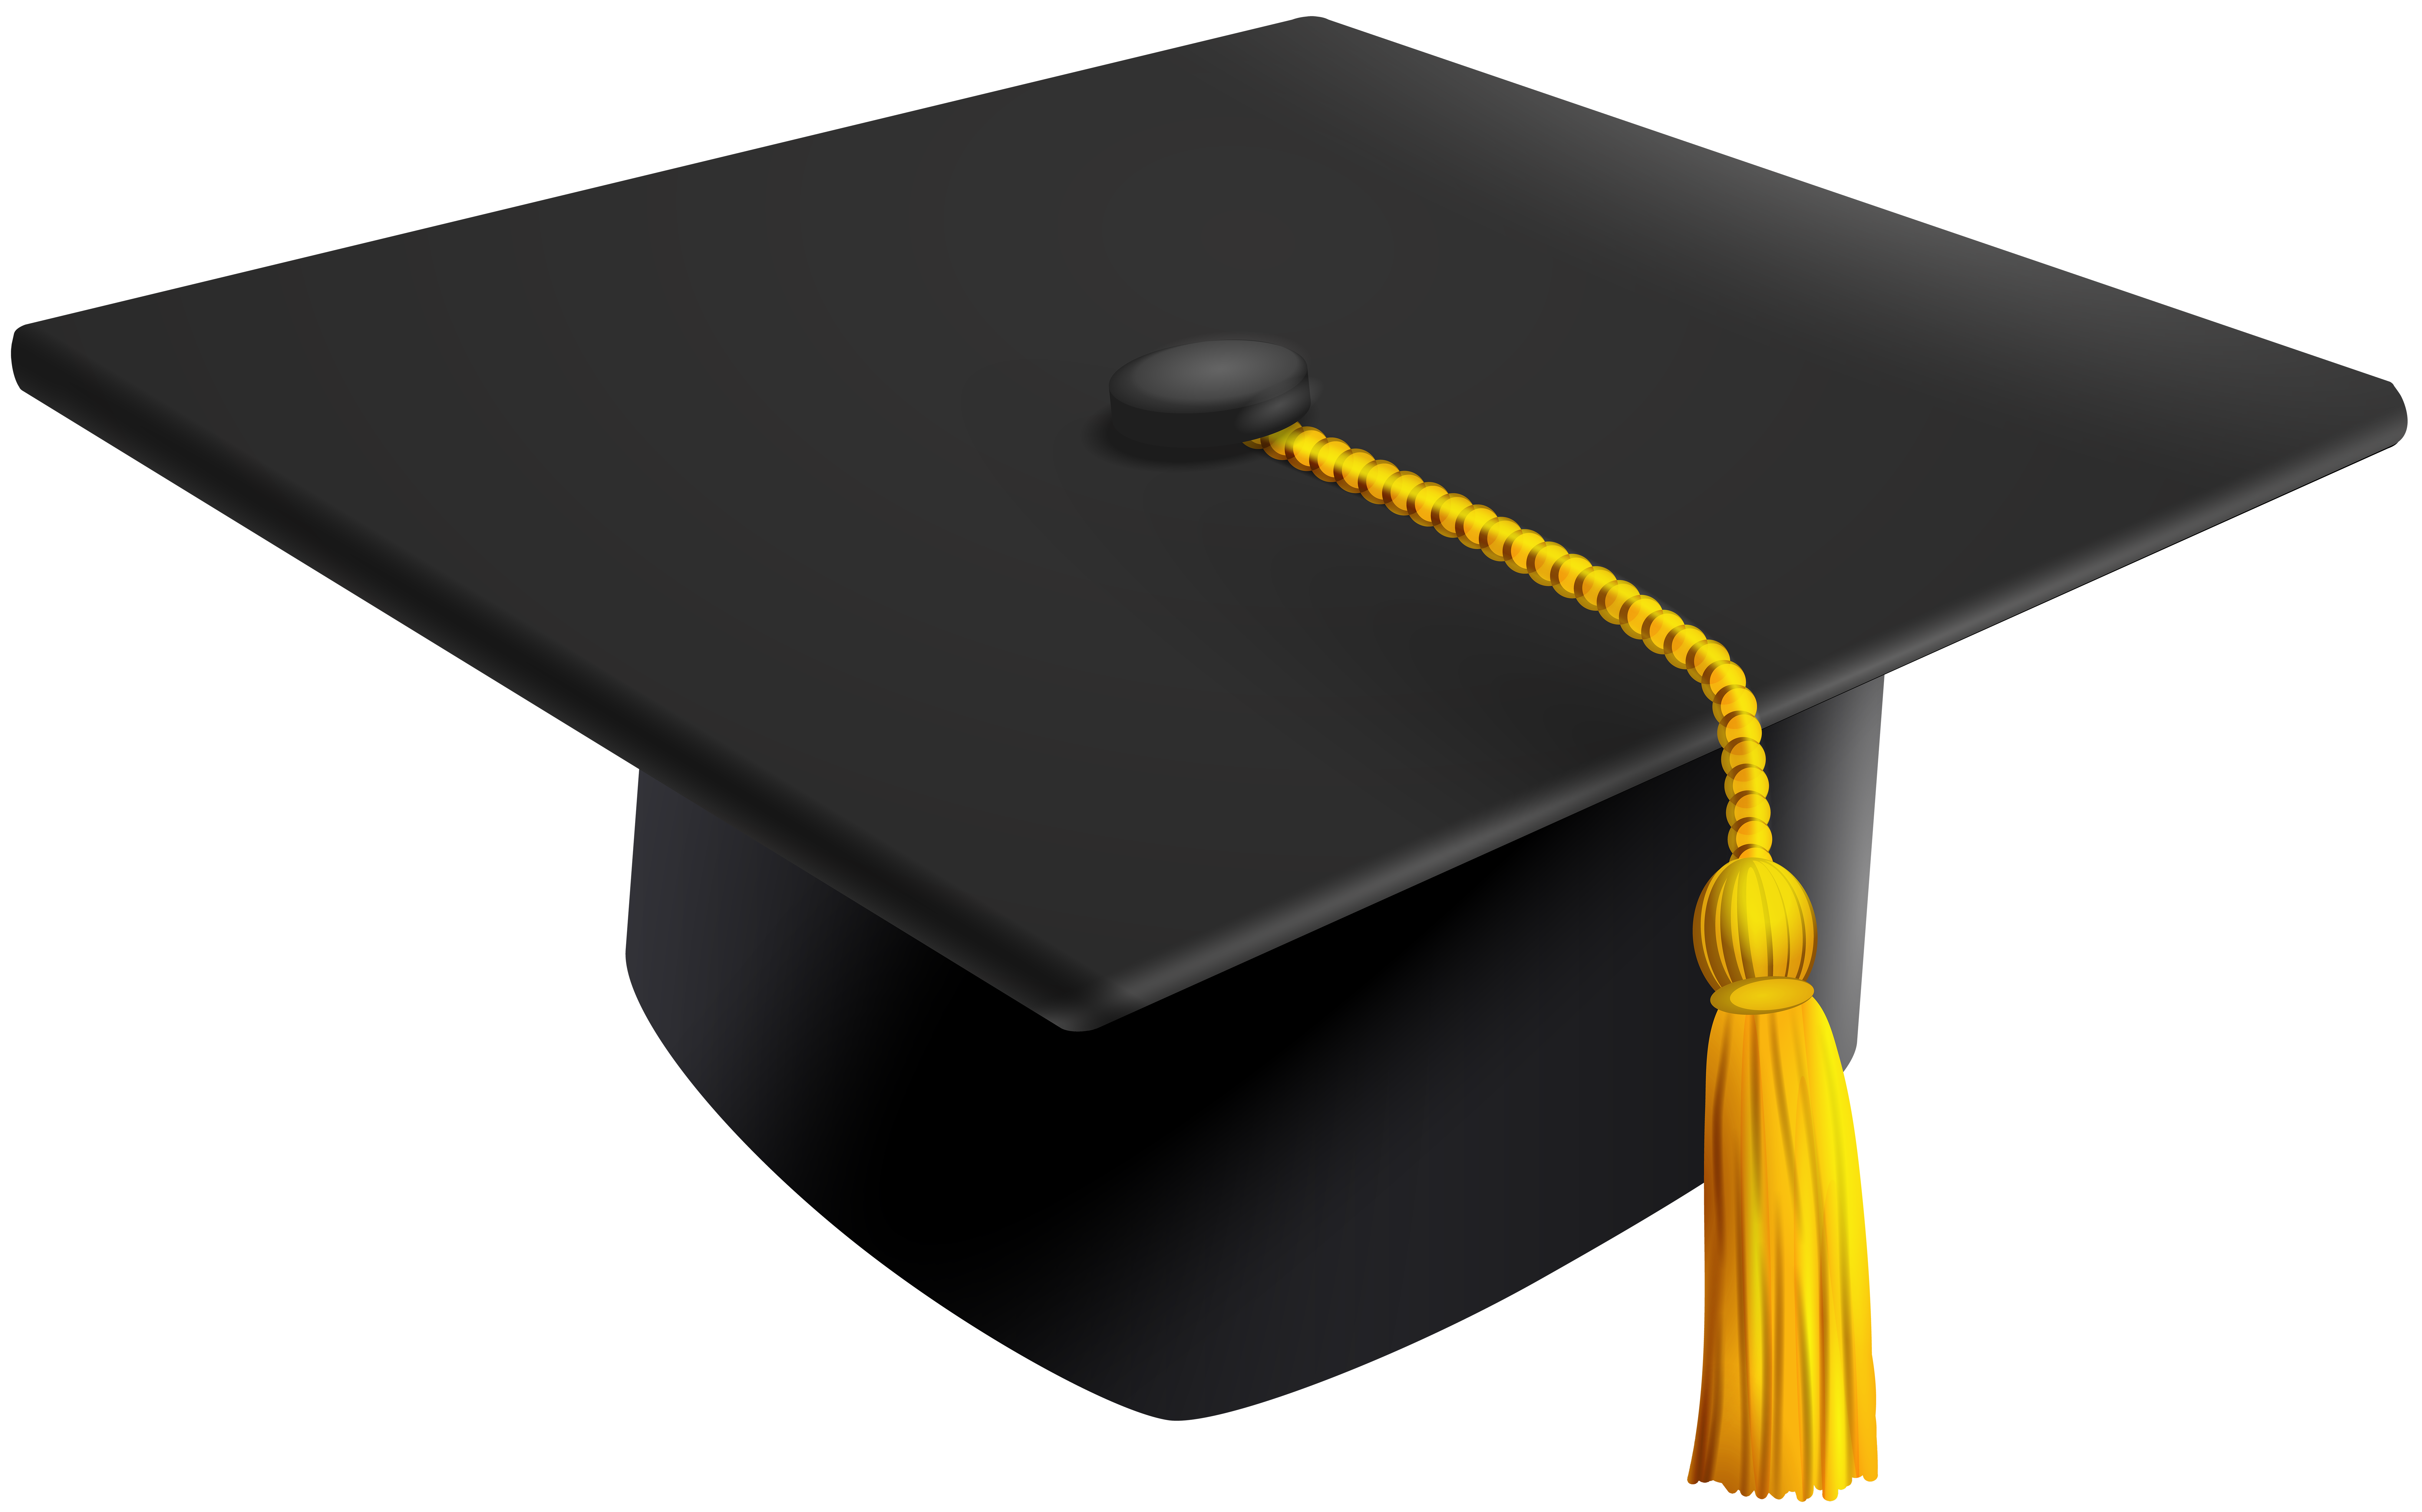 Free Graduation Hat Clipart, Download Free Graduation Hat Clipart png